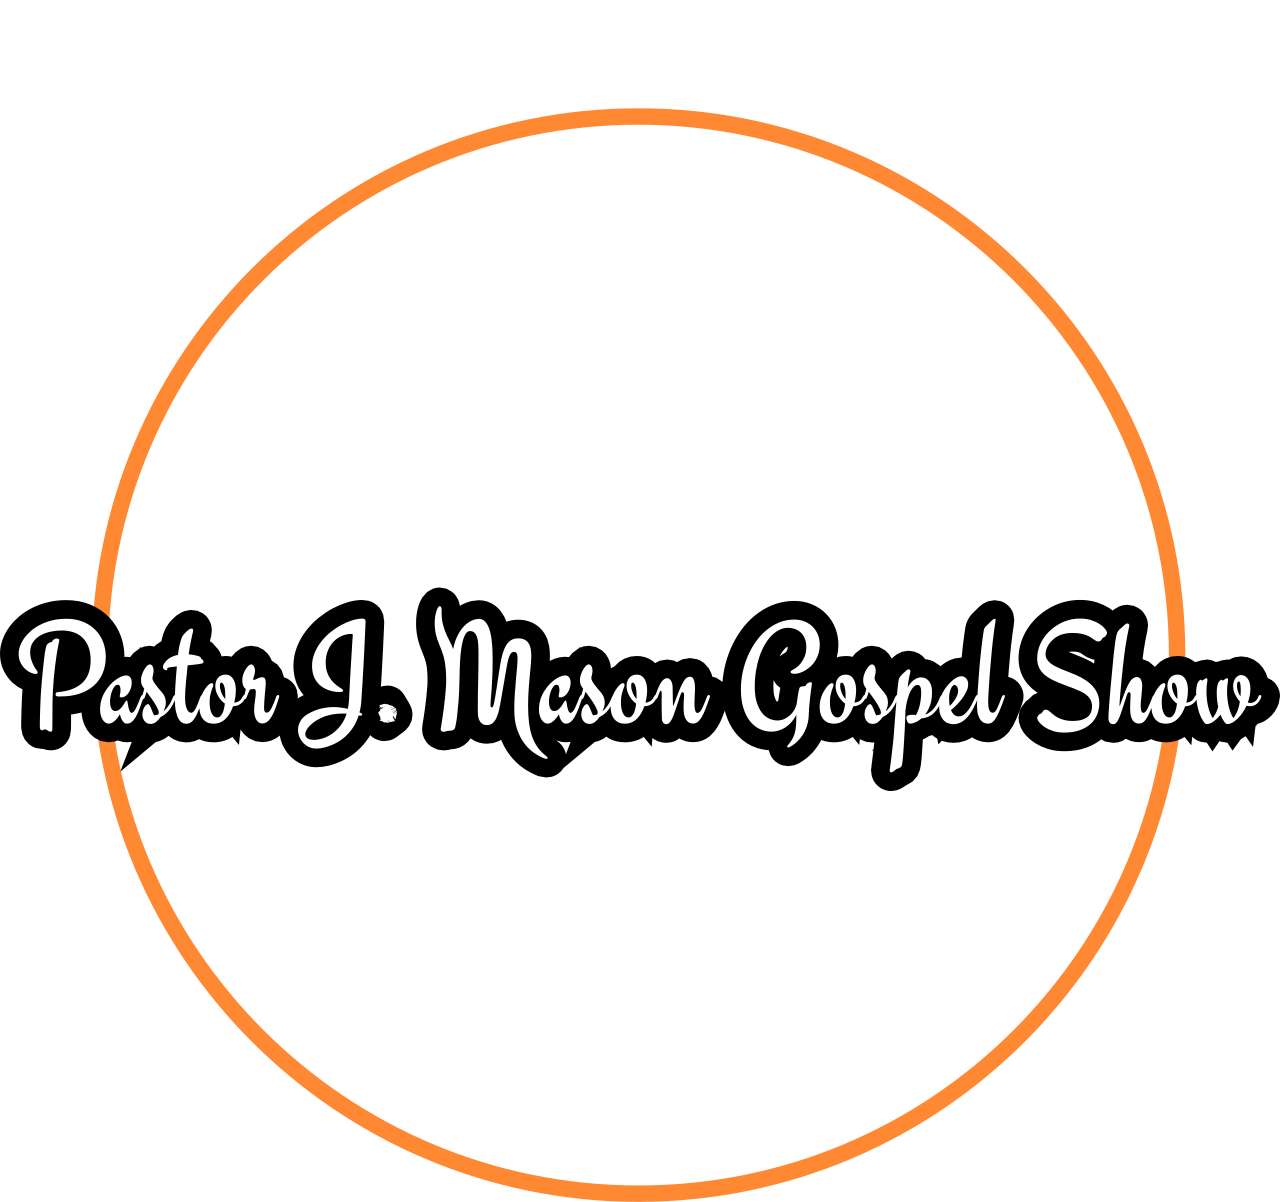 Pastor J. Mason Gospel Show's logo